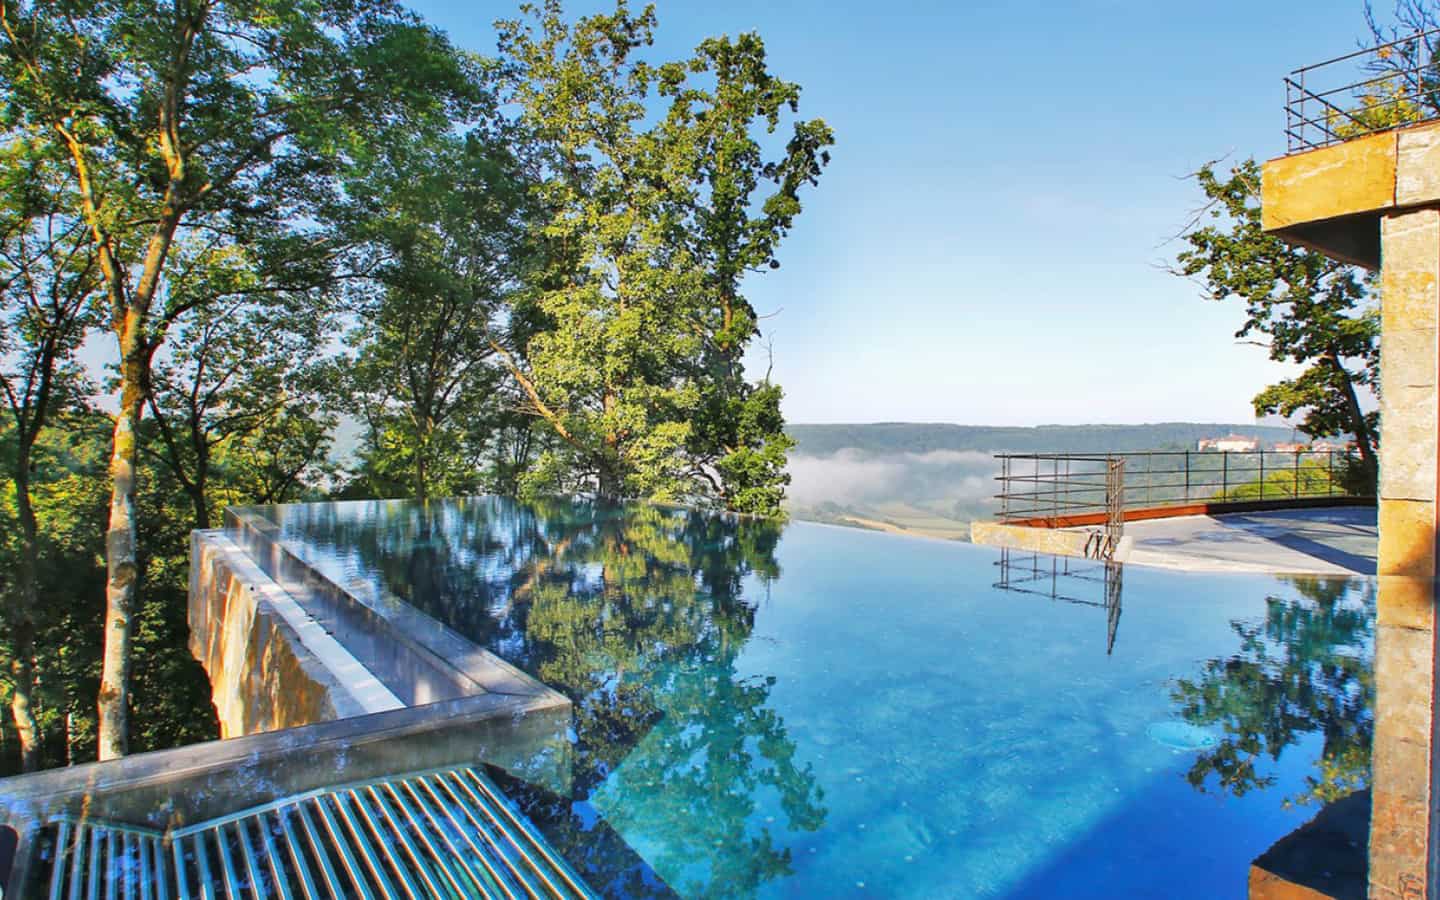 Infinity Pool des Mawell Resorts bei strahlend blauem Himmel im Sommer